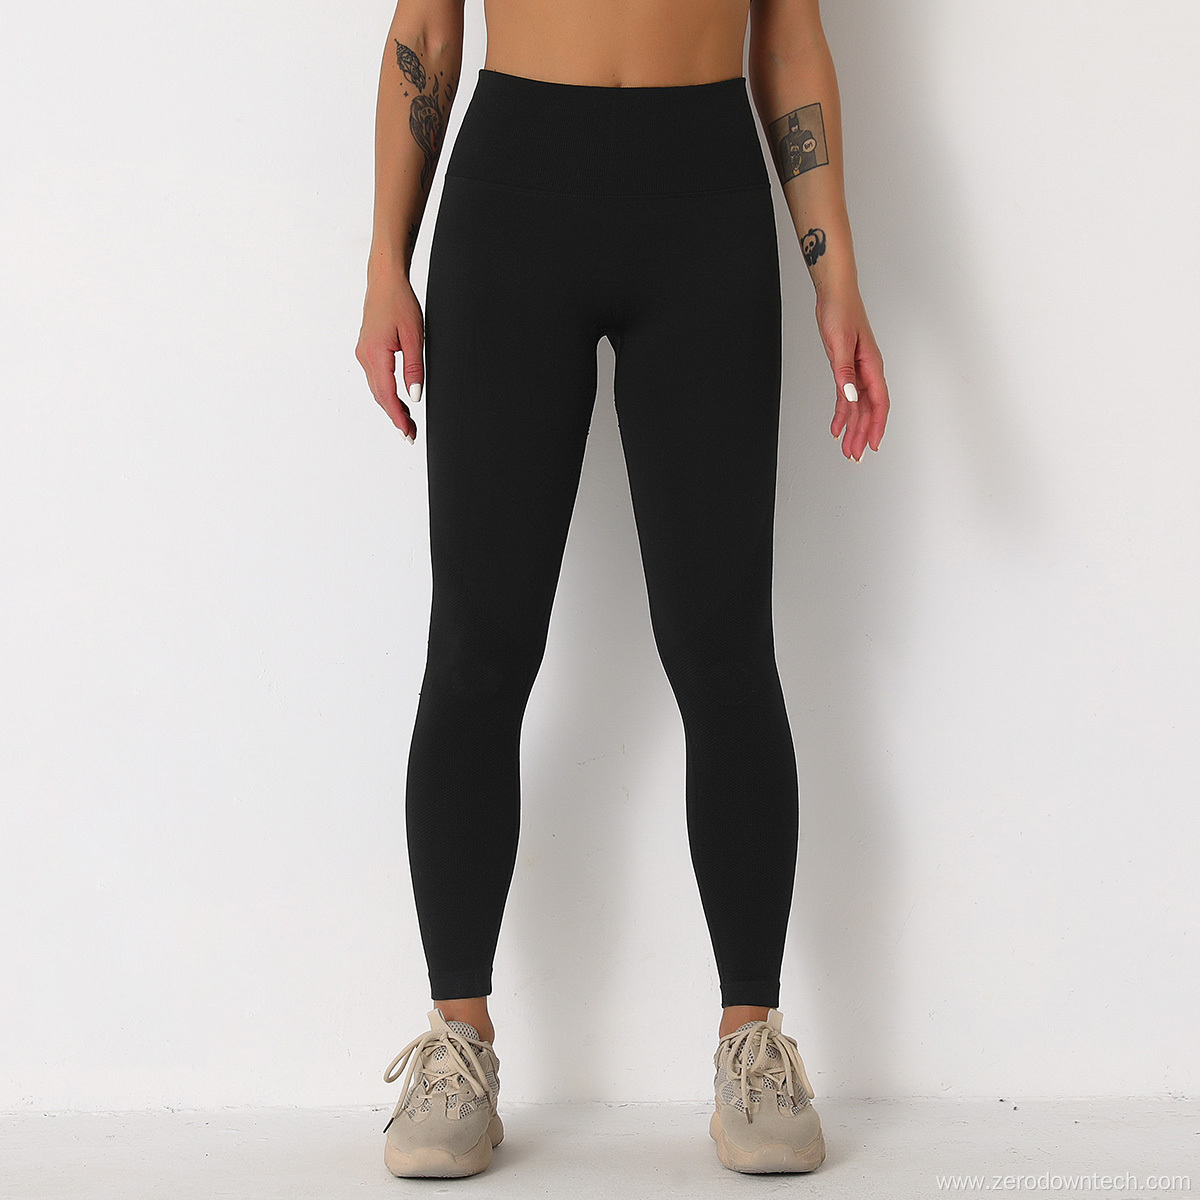 sports fitness sexy hip yoga pants